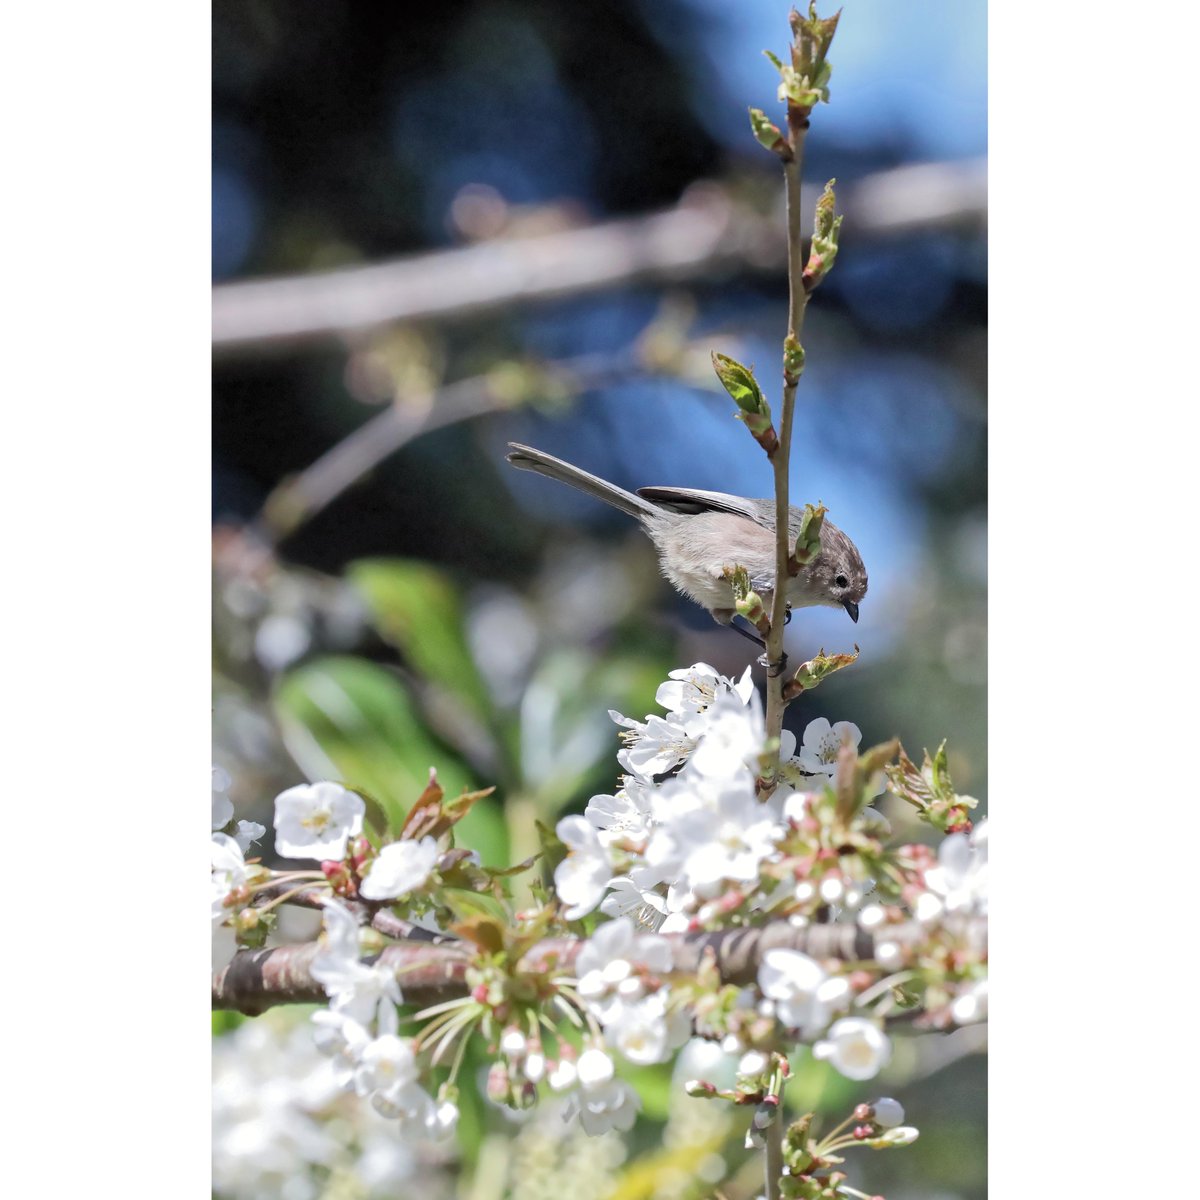 Spring blooms and birds. #bushtit #springtime #birding #audubonsociety #cornelllabofornithology #birdsandbloomsmagazine